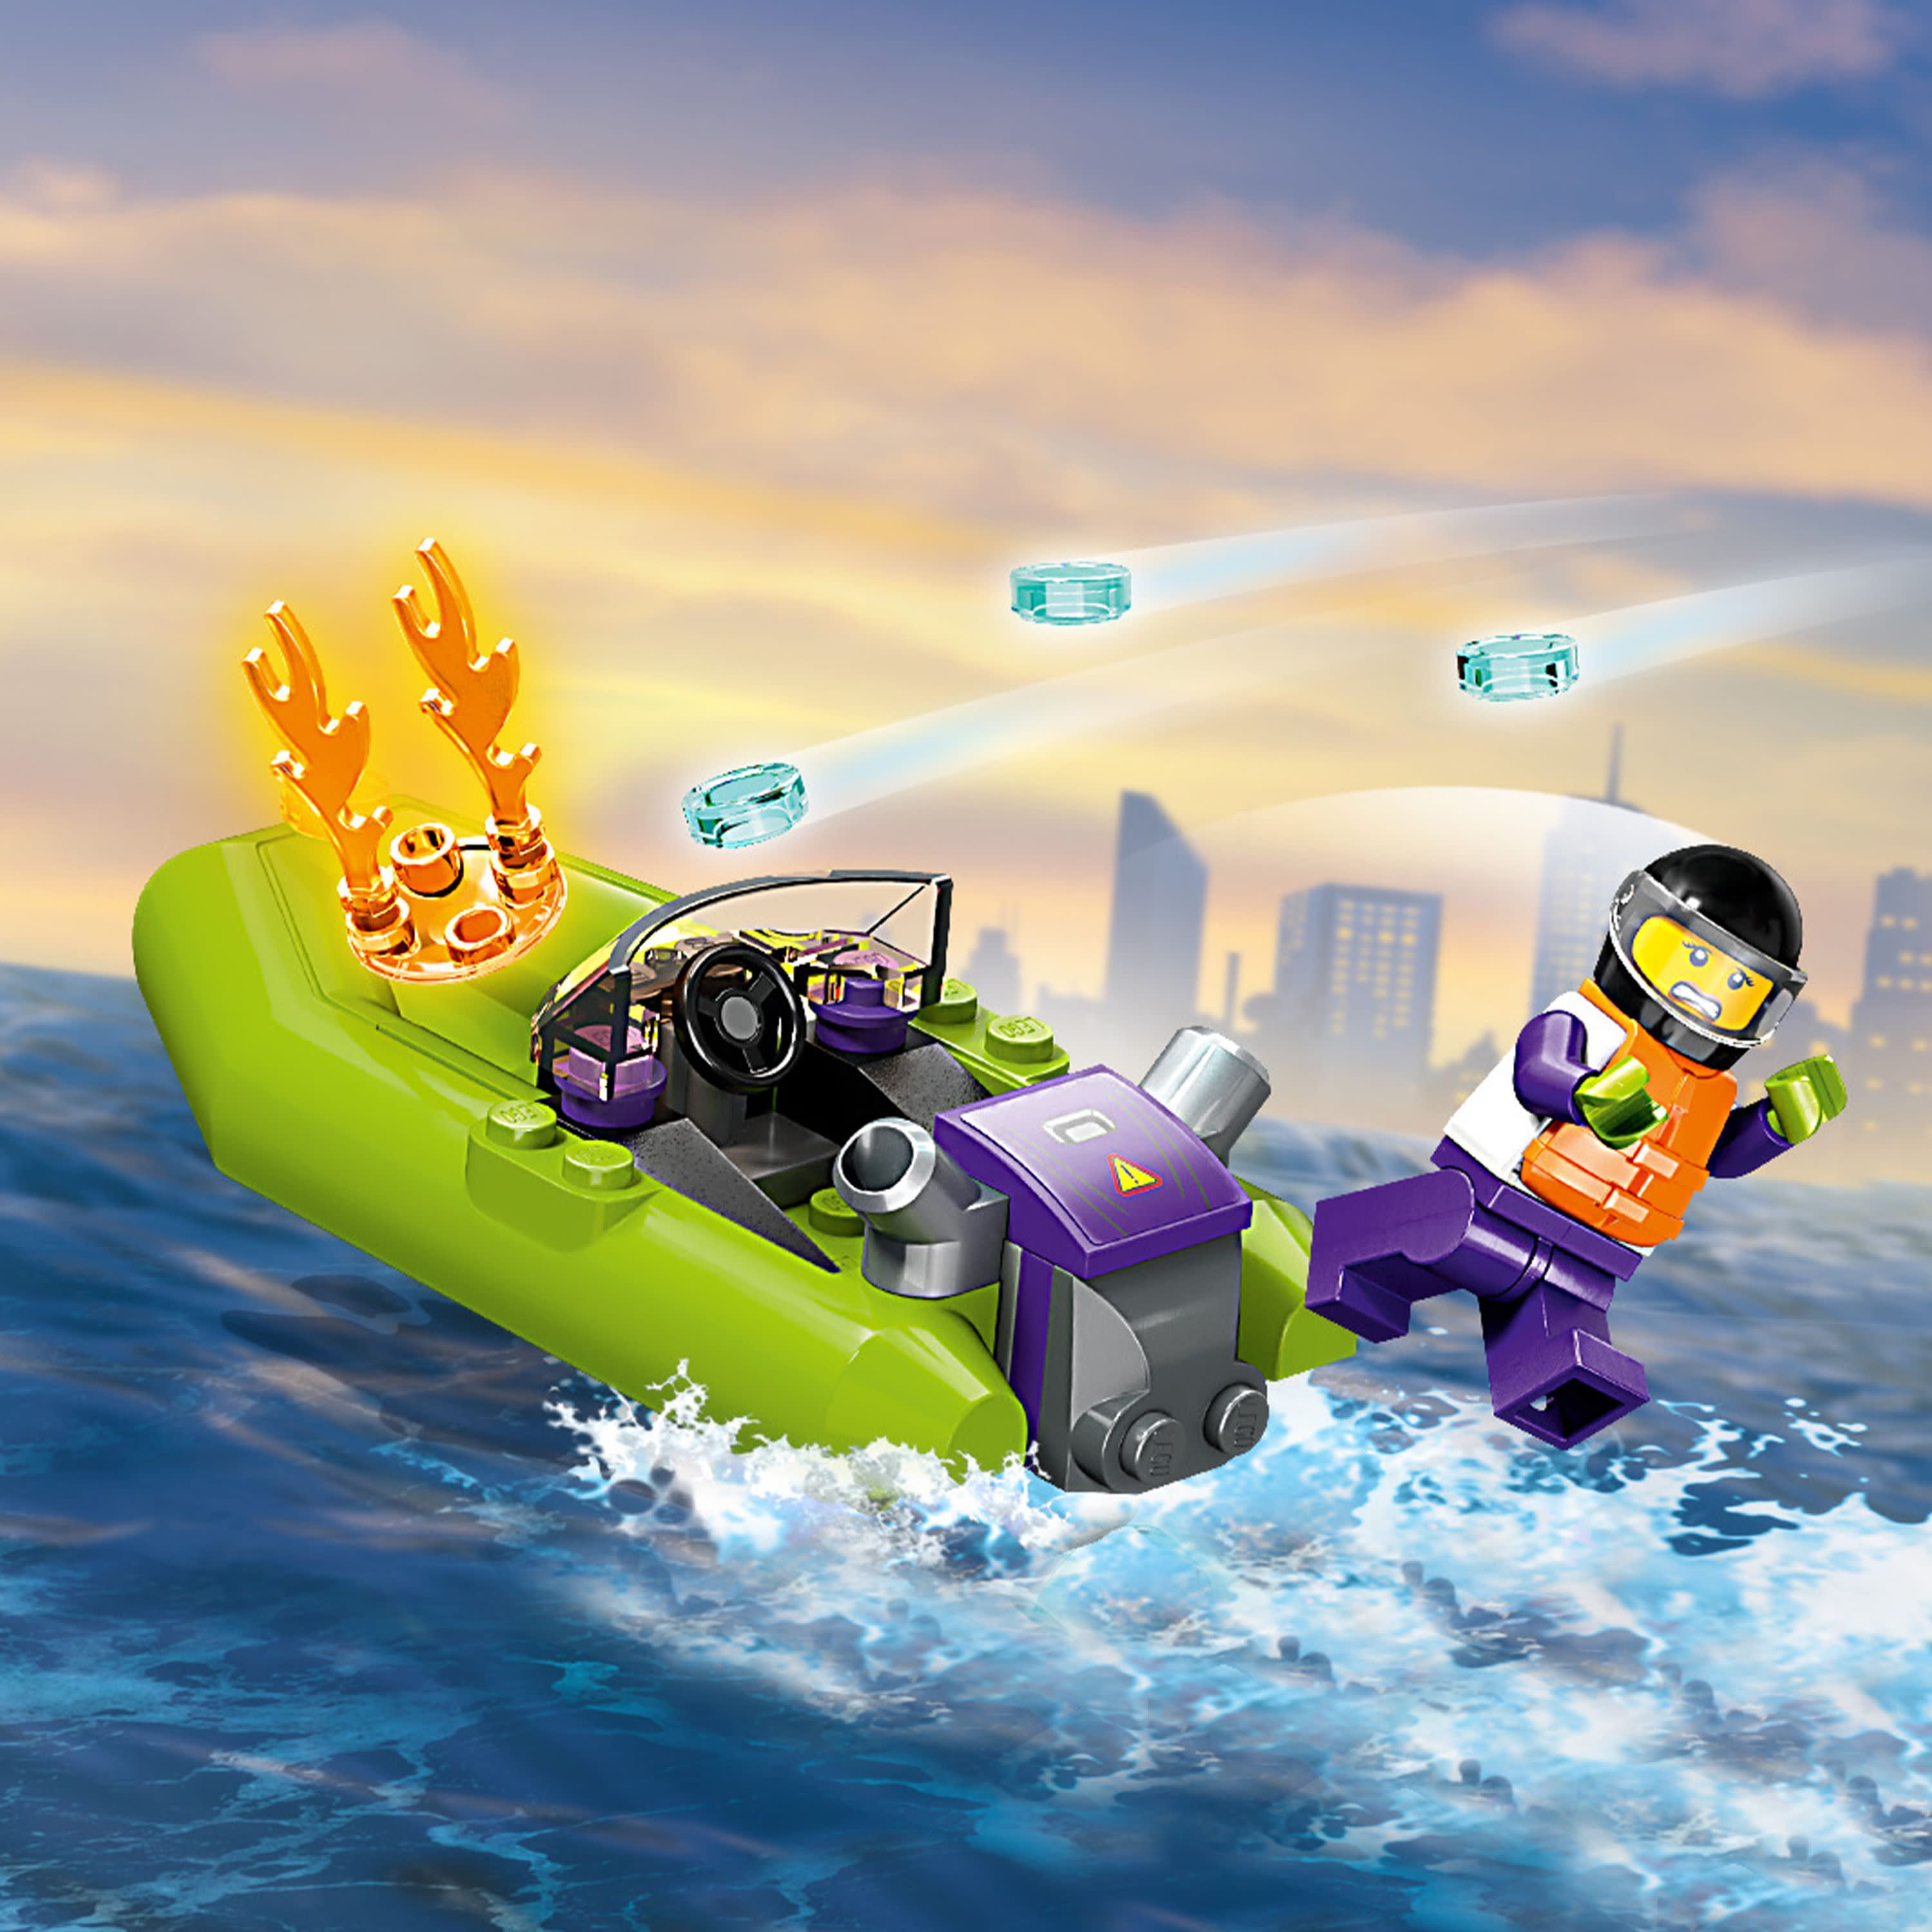 LEGO City - 60373 Fire Rescue Boat - Playpolis